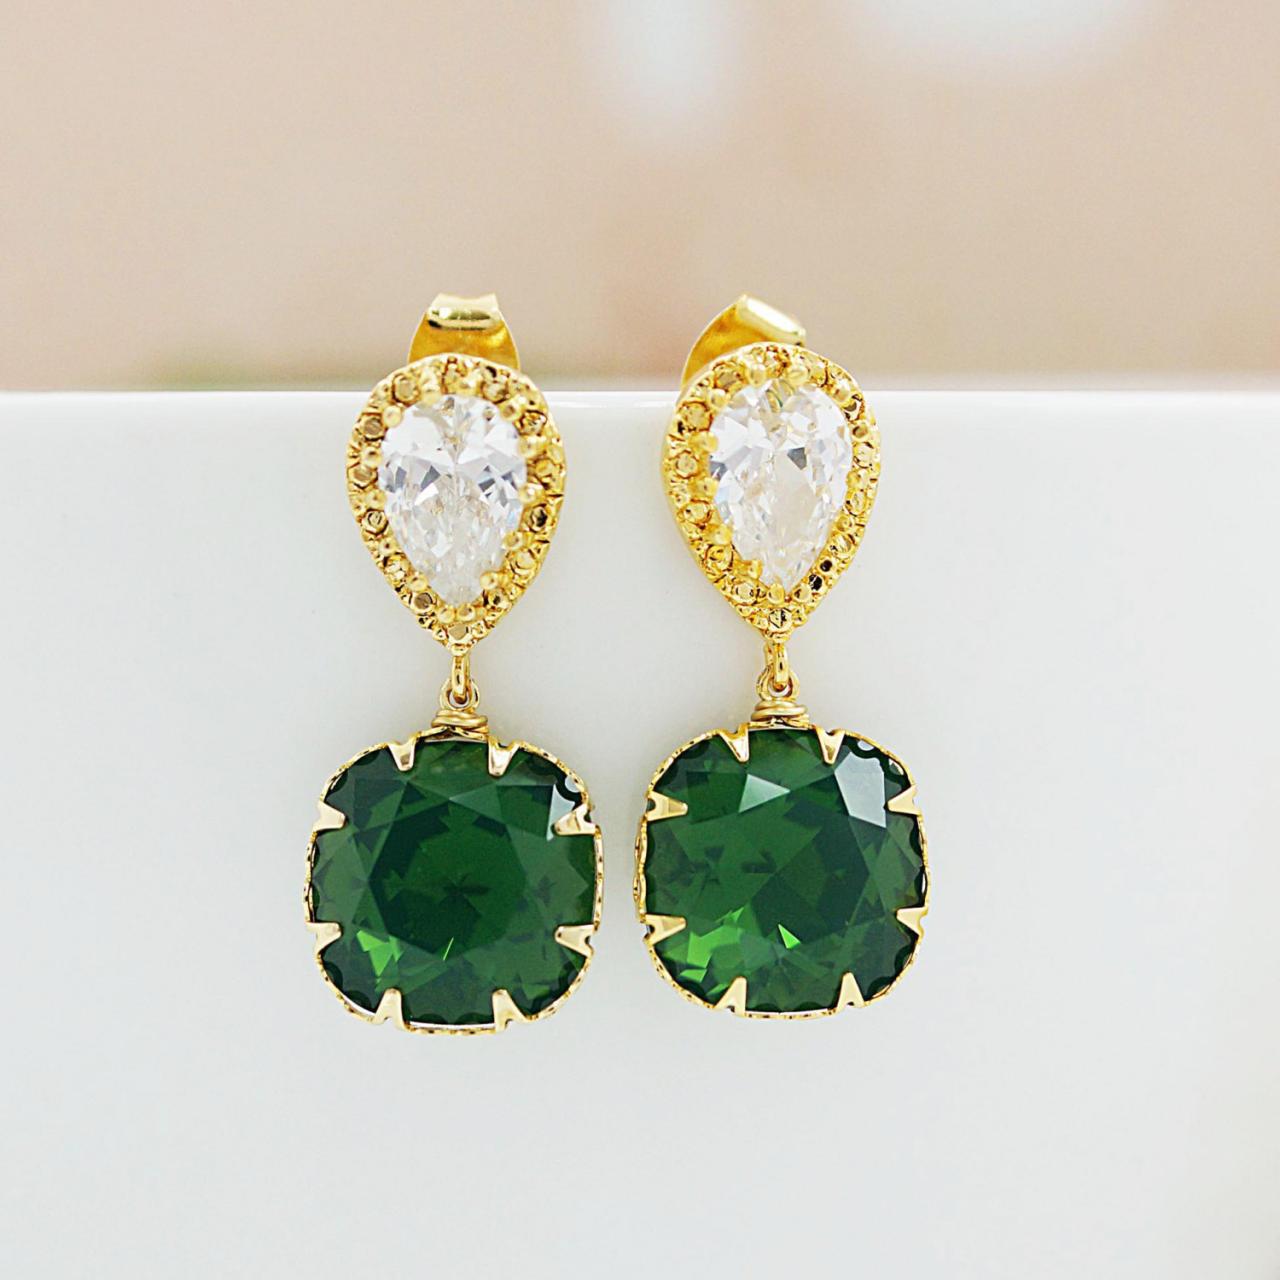 Bridesmaid Gifts Bridesmaid Earrings Wedding Jewelry Palace Green Opal Swarovski Crystal Square Drops Dangle Earrings Christmas Gift